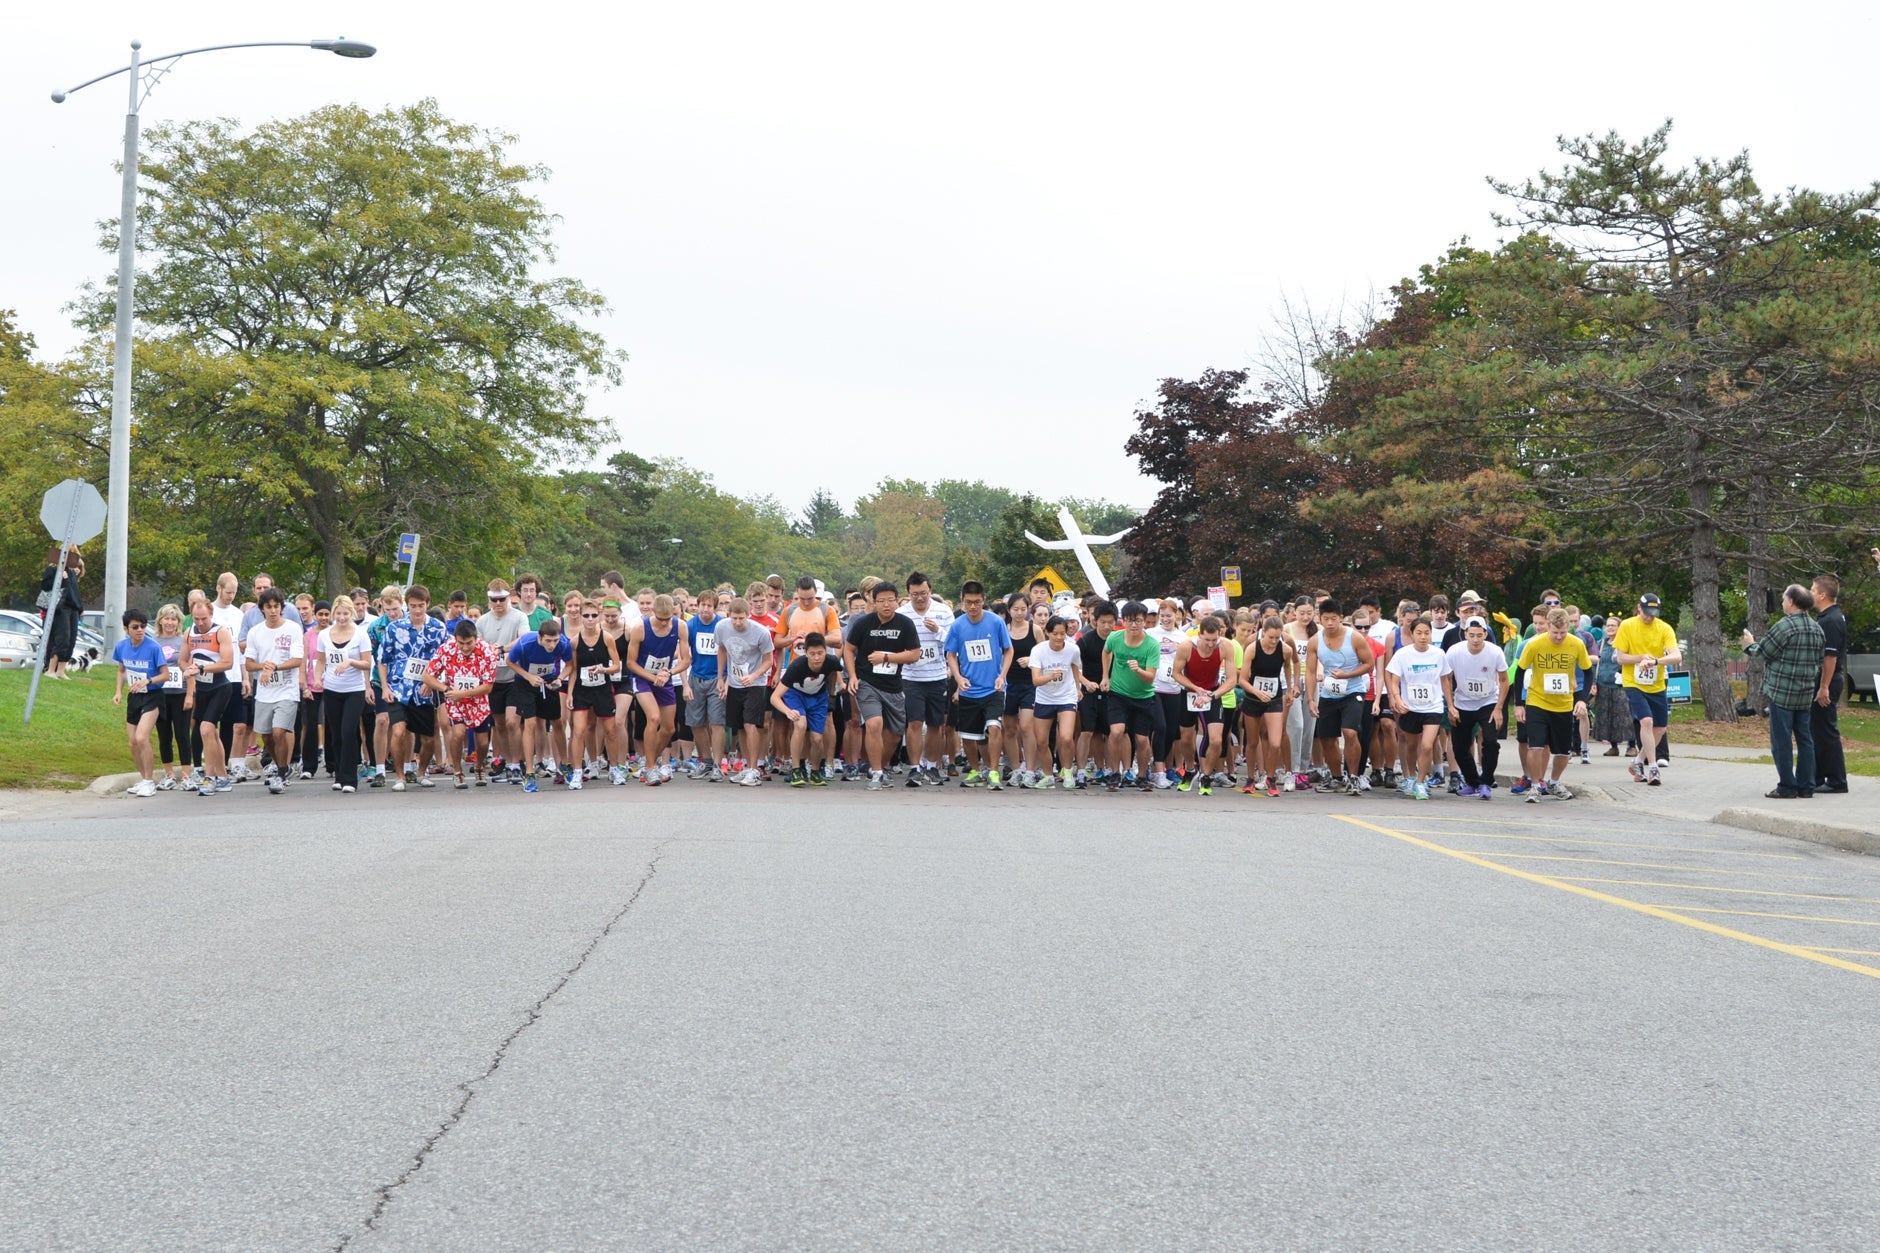 Participants beginning to run.